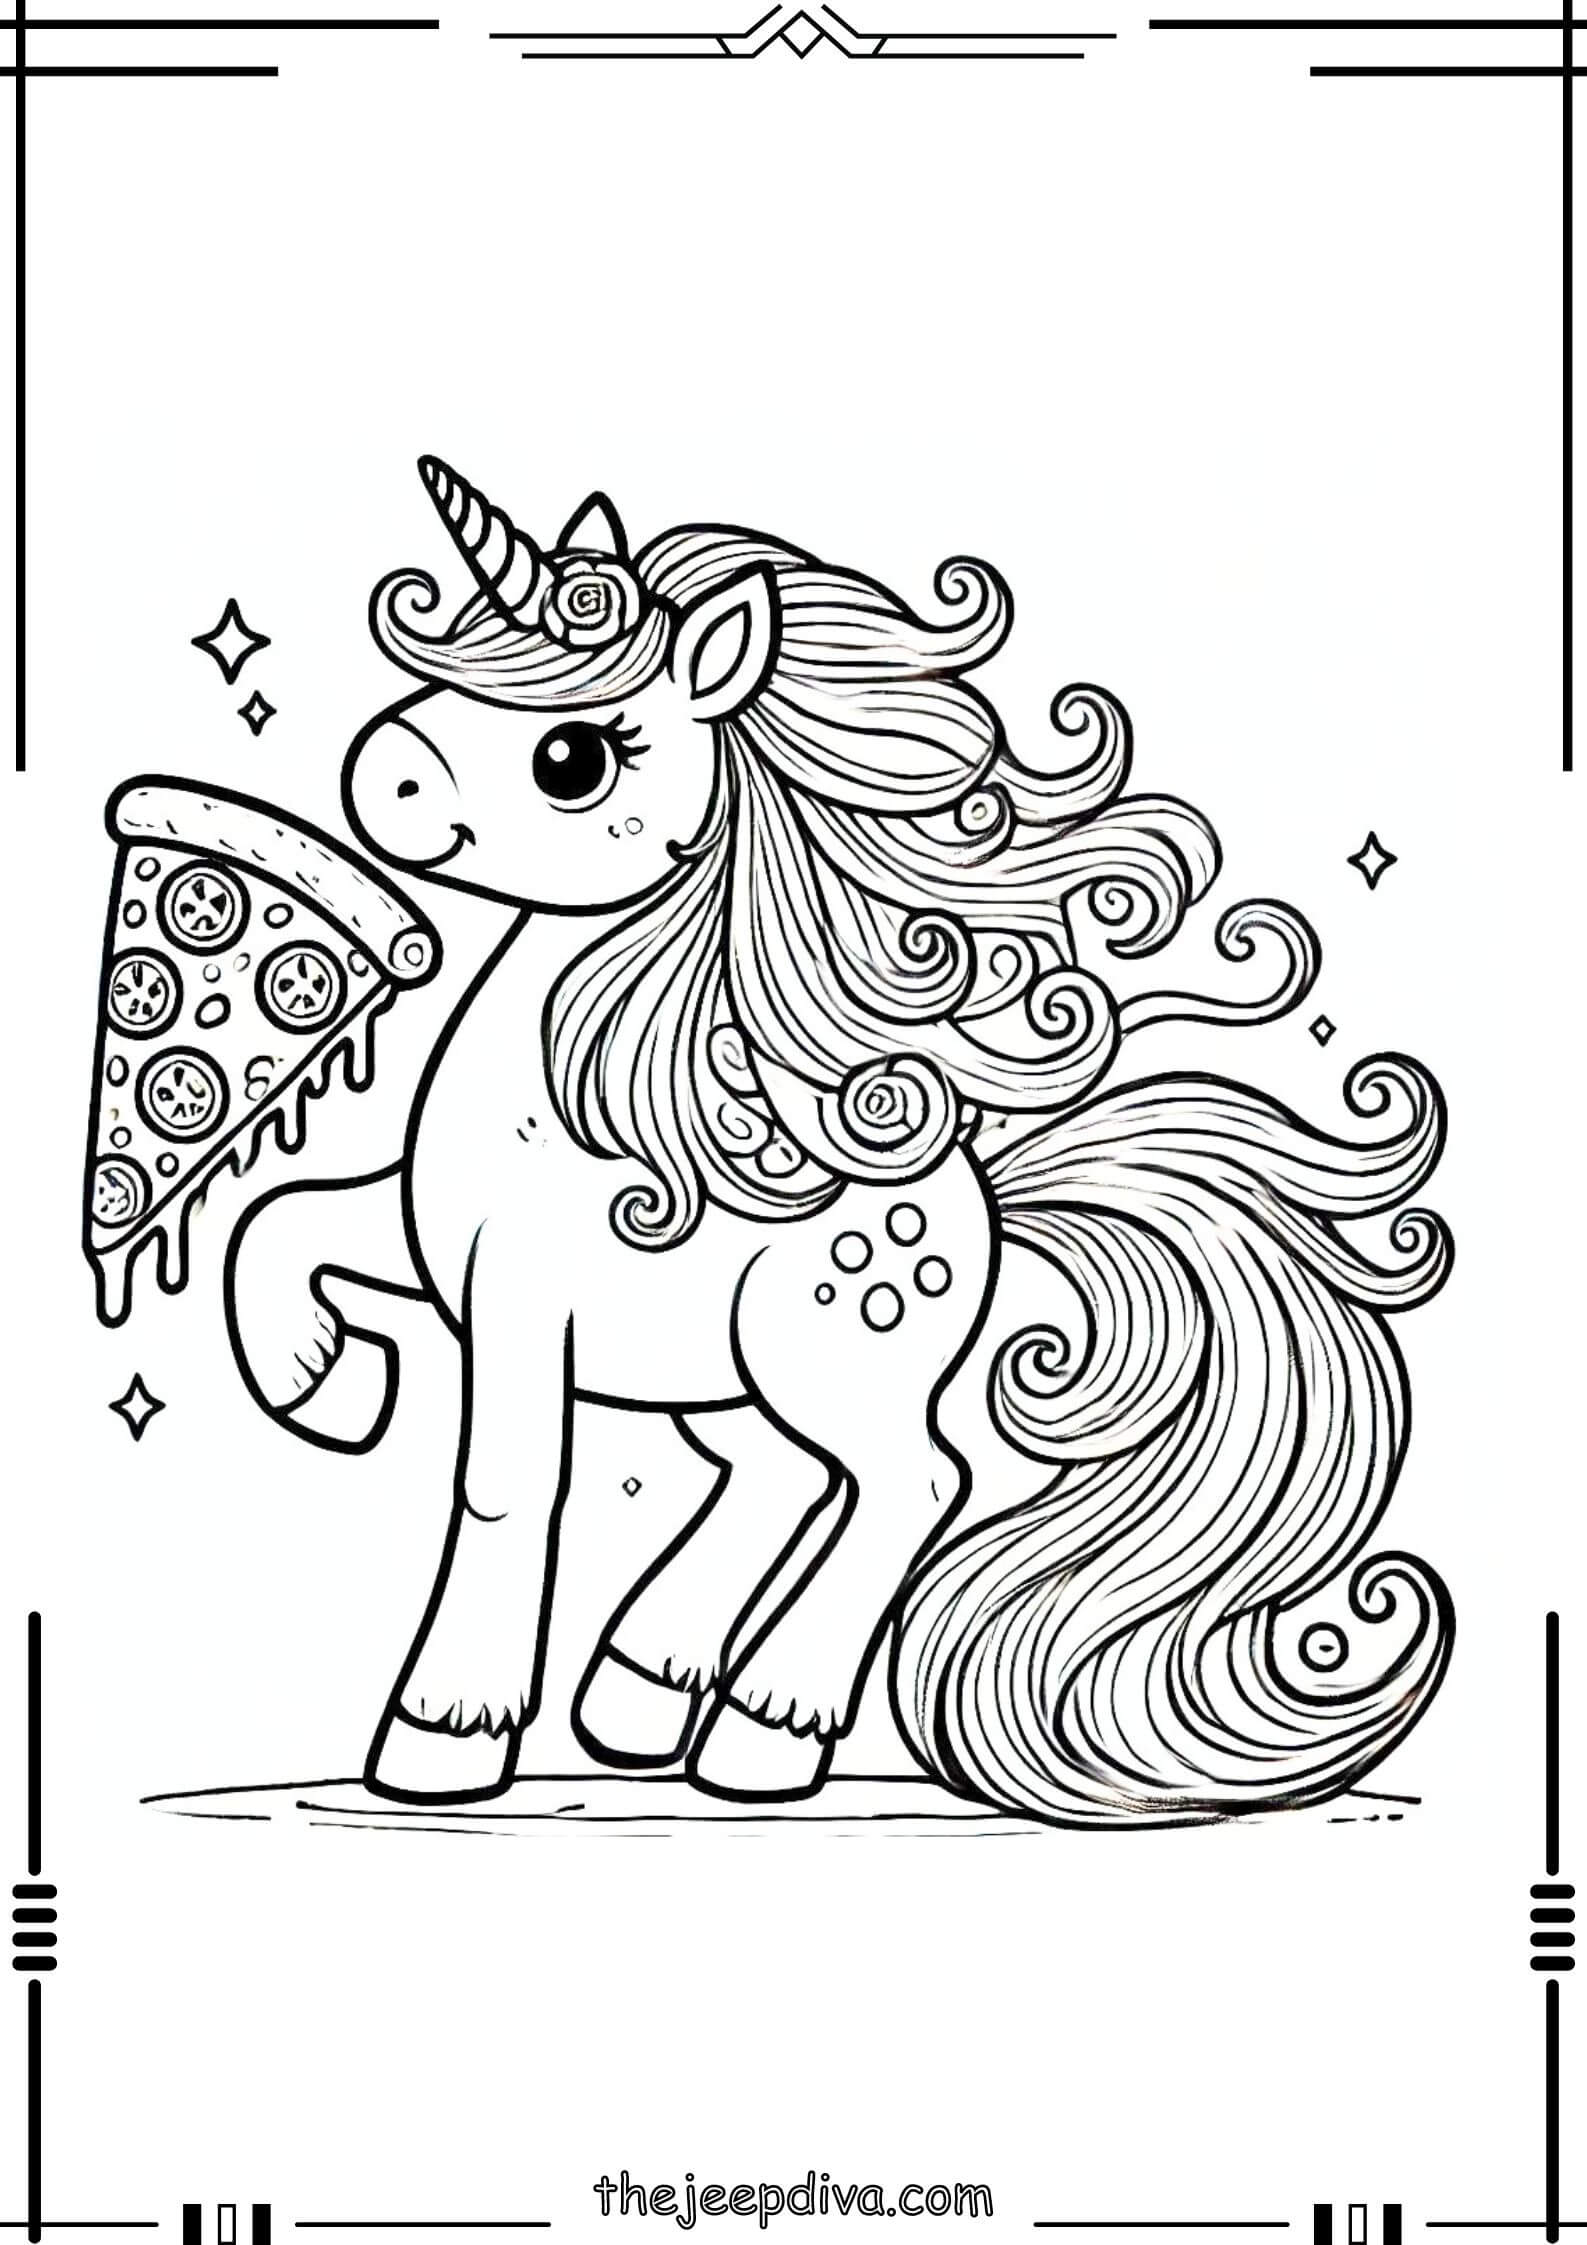 unicorn-coloring-page-medium-18